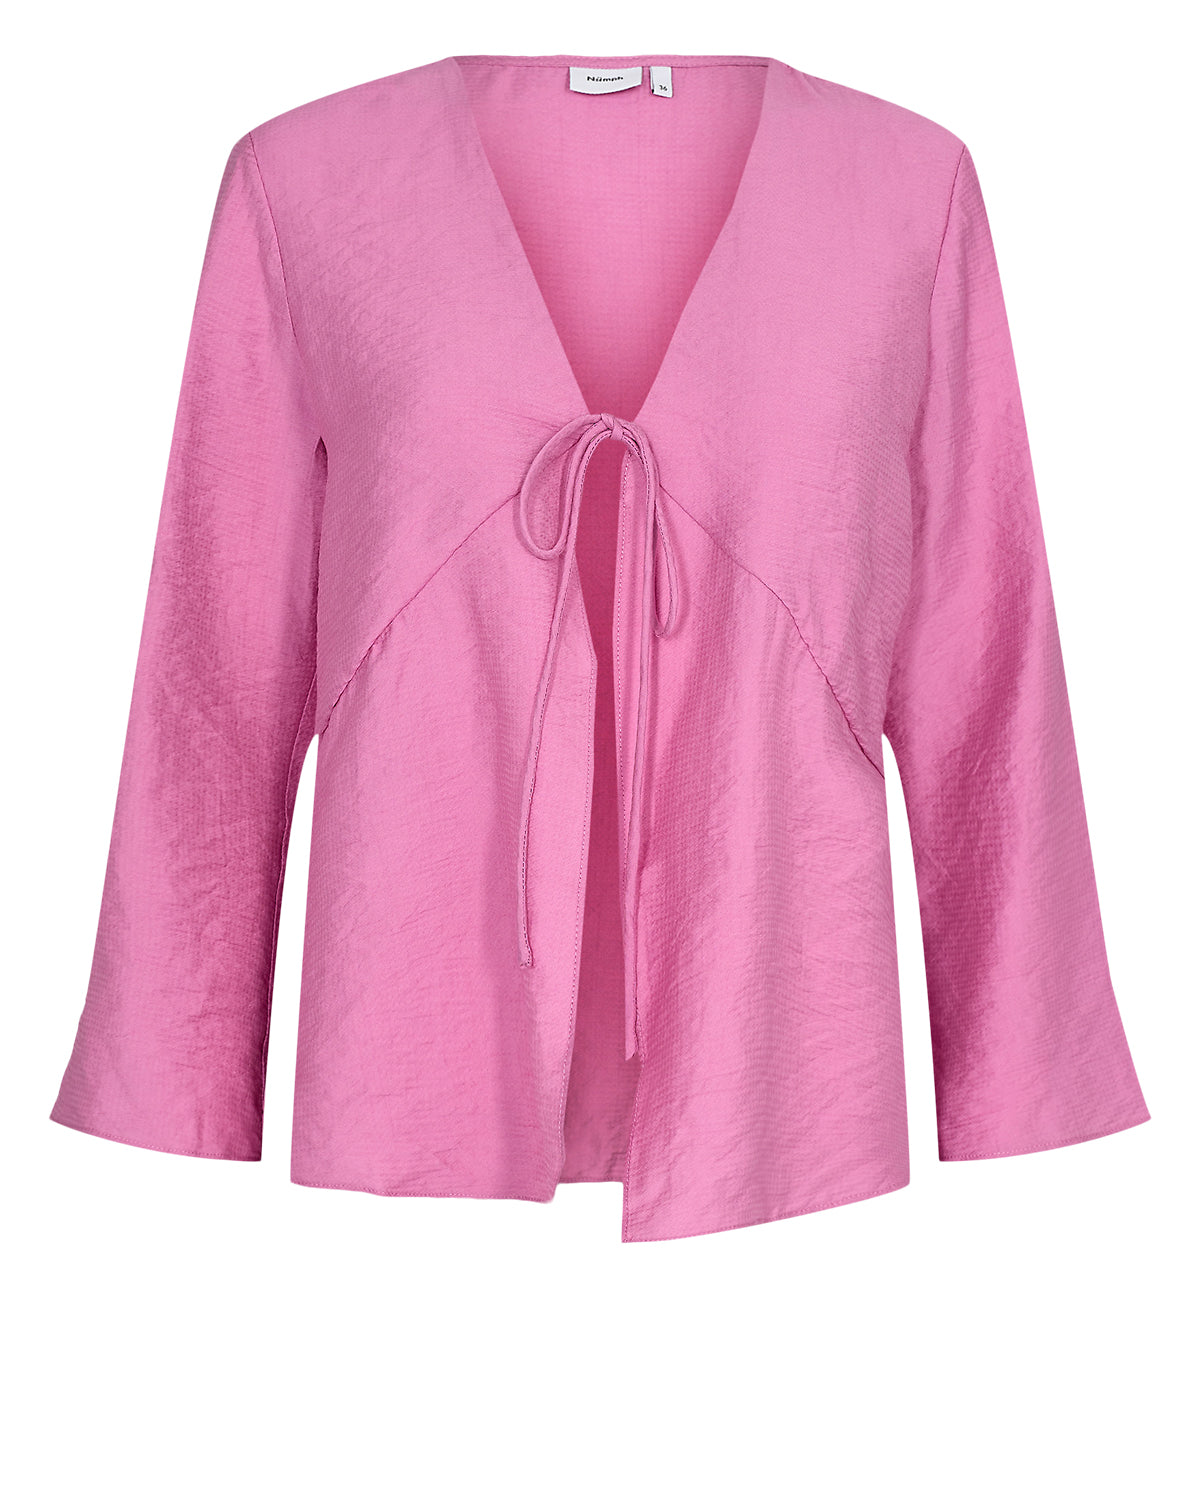 Nuroxanne Tie Shirt Begonia Pink